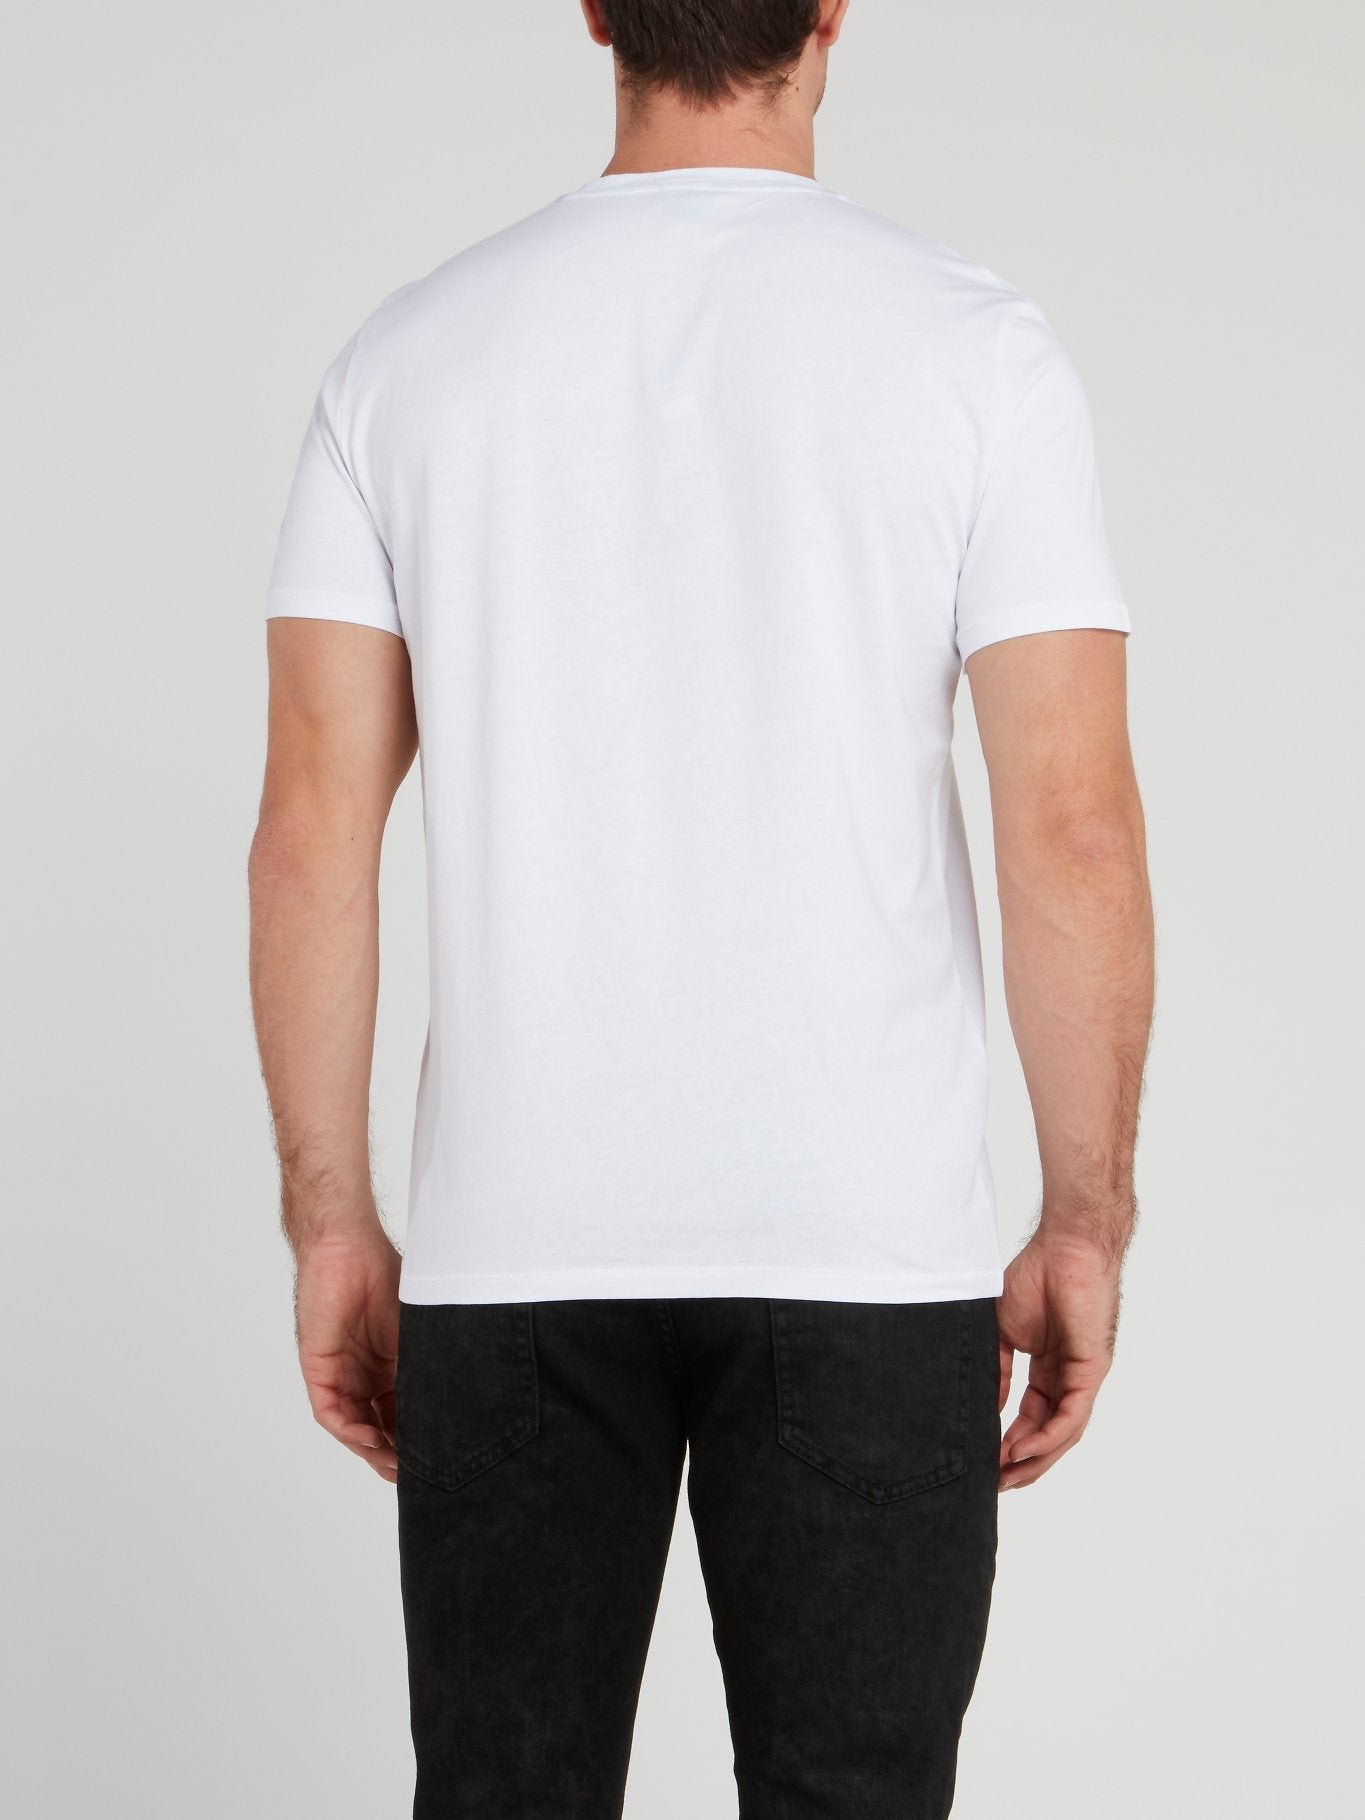 White Distorted Statement Print T-Shirt